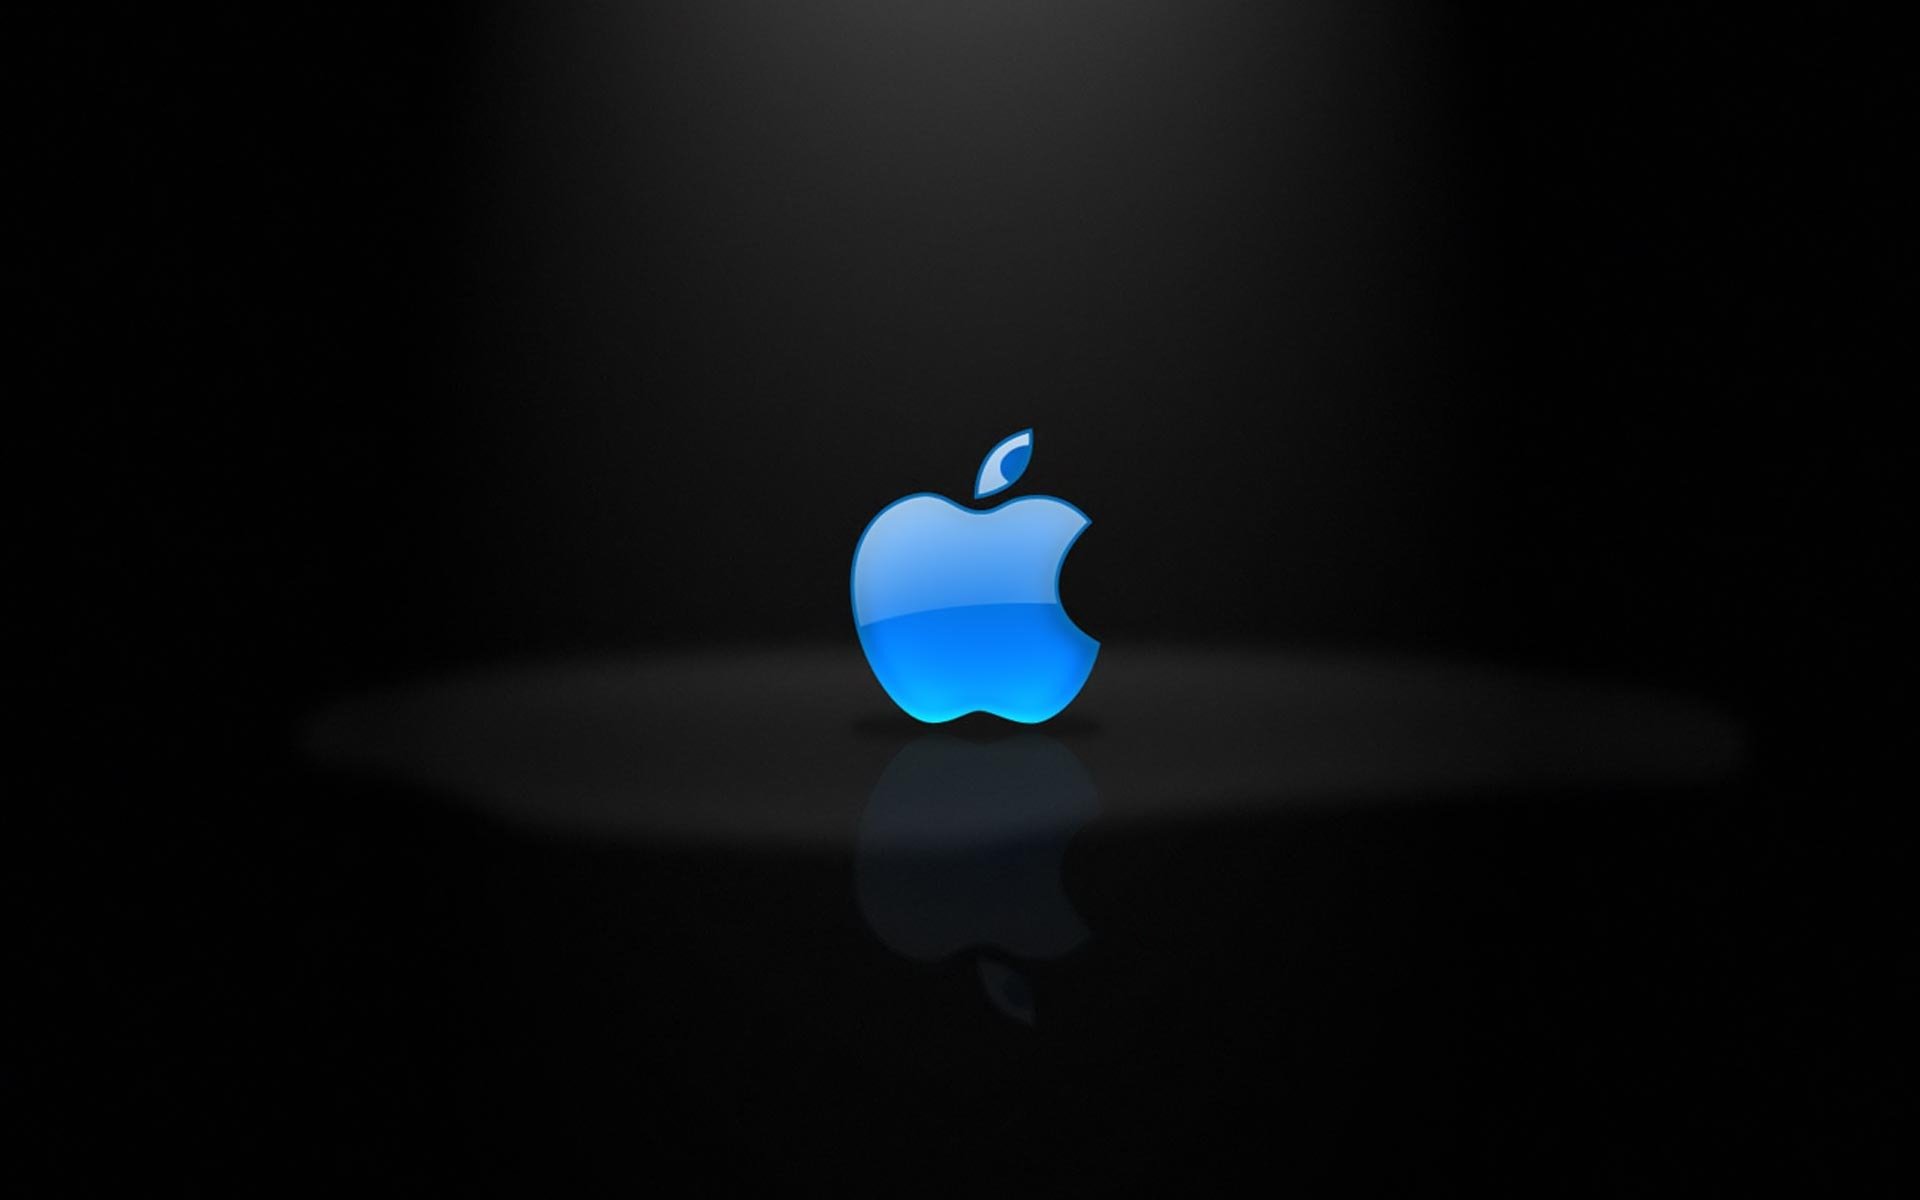 Blue Apple logo wallpaper 522